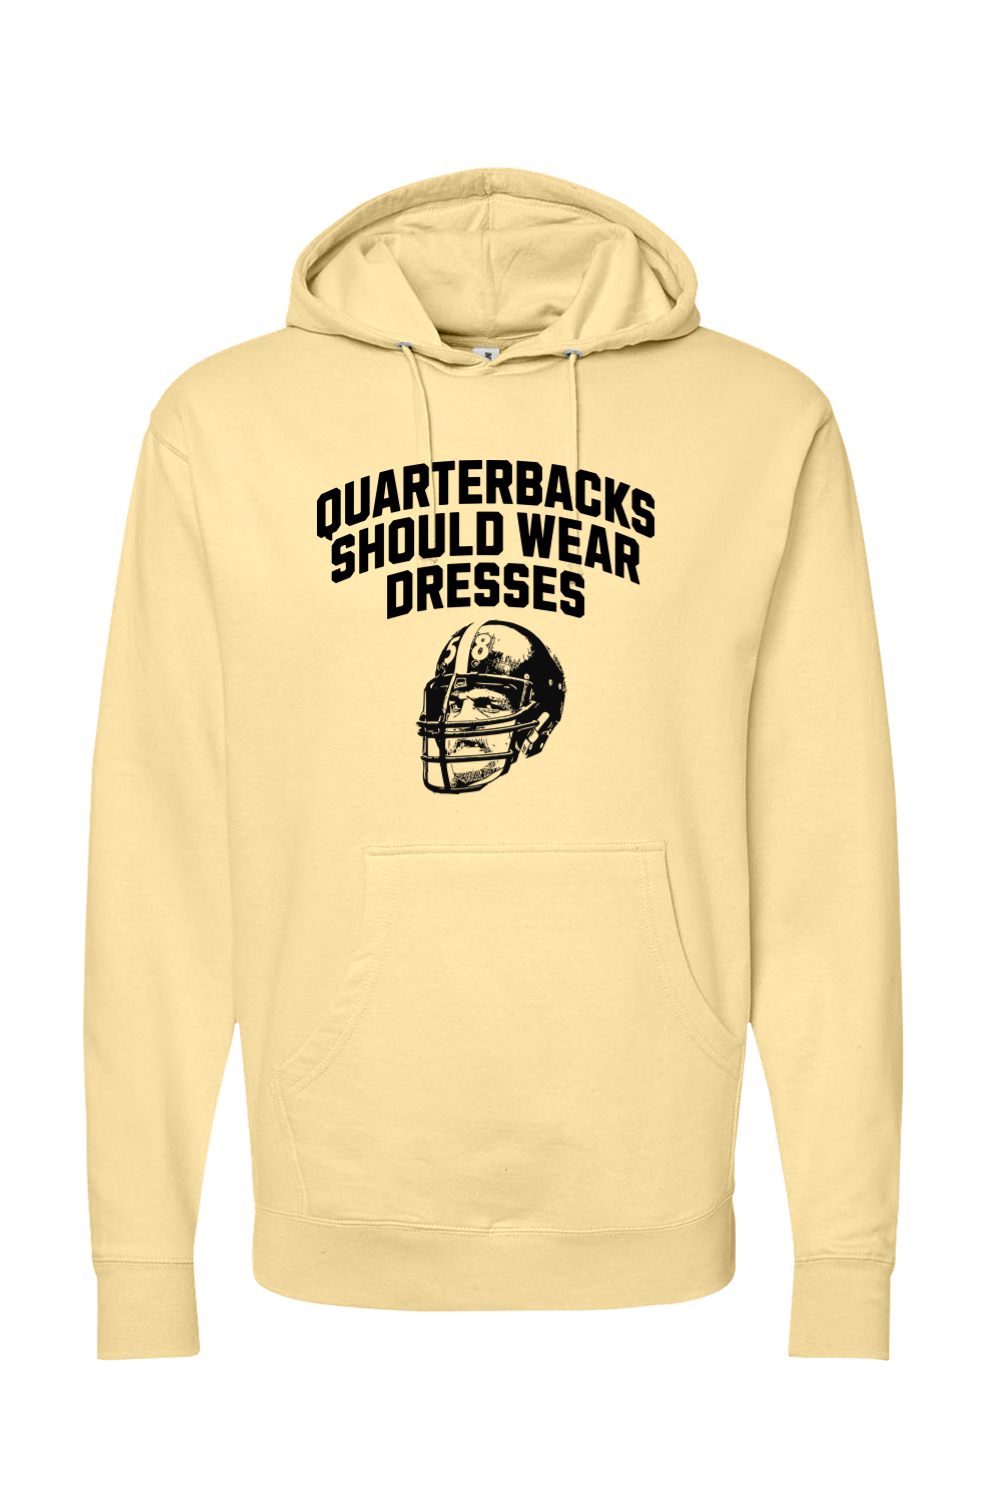 Quarterbacks Should Wear Dresses - Hoodie - Yinzylvania